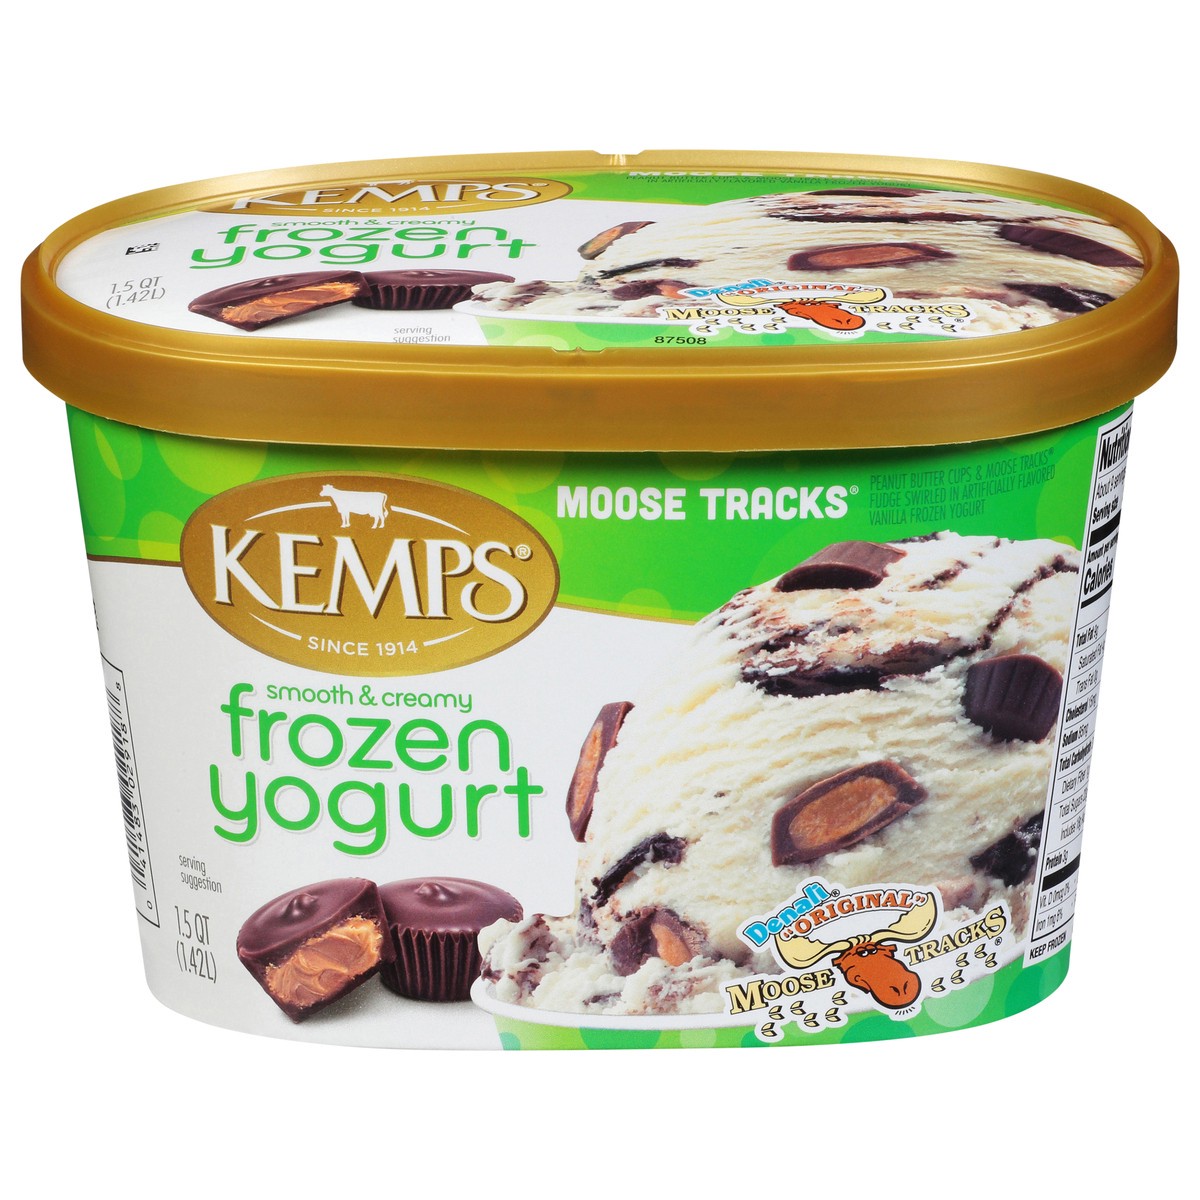 slide 1 of 12, Kemps Moose Tracks Peanut Butter Cups Frozen Yogurt, 1.5 qt